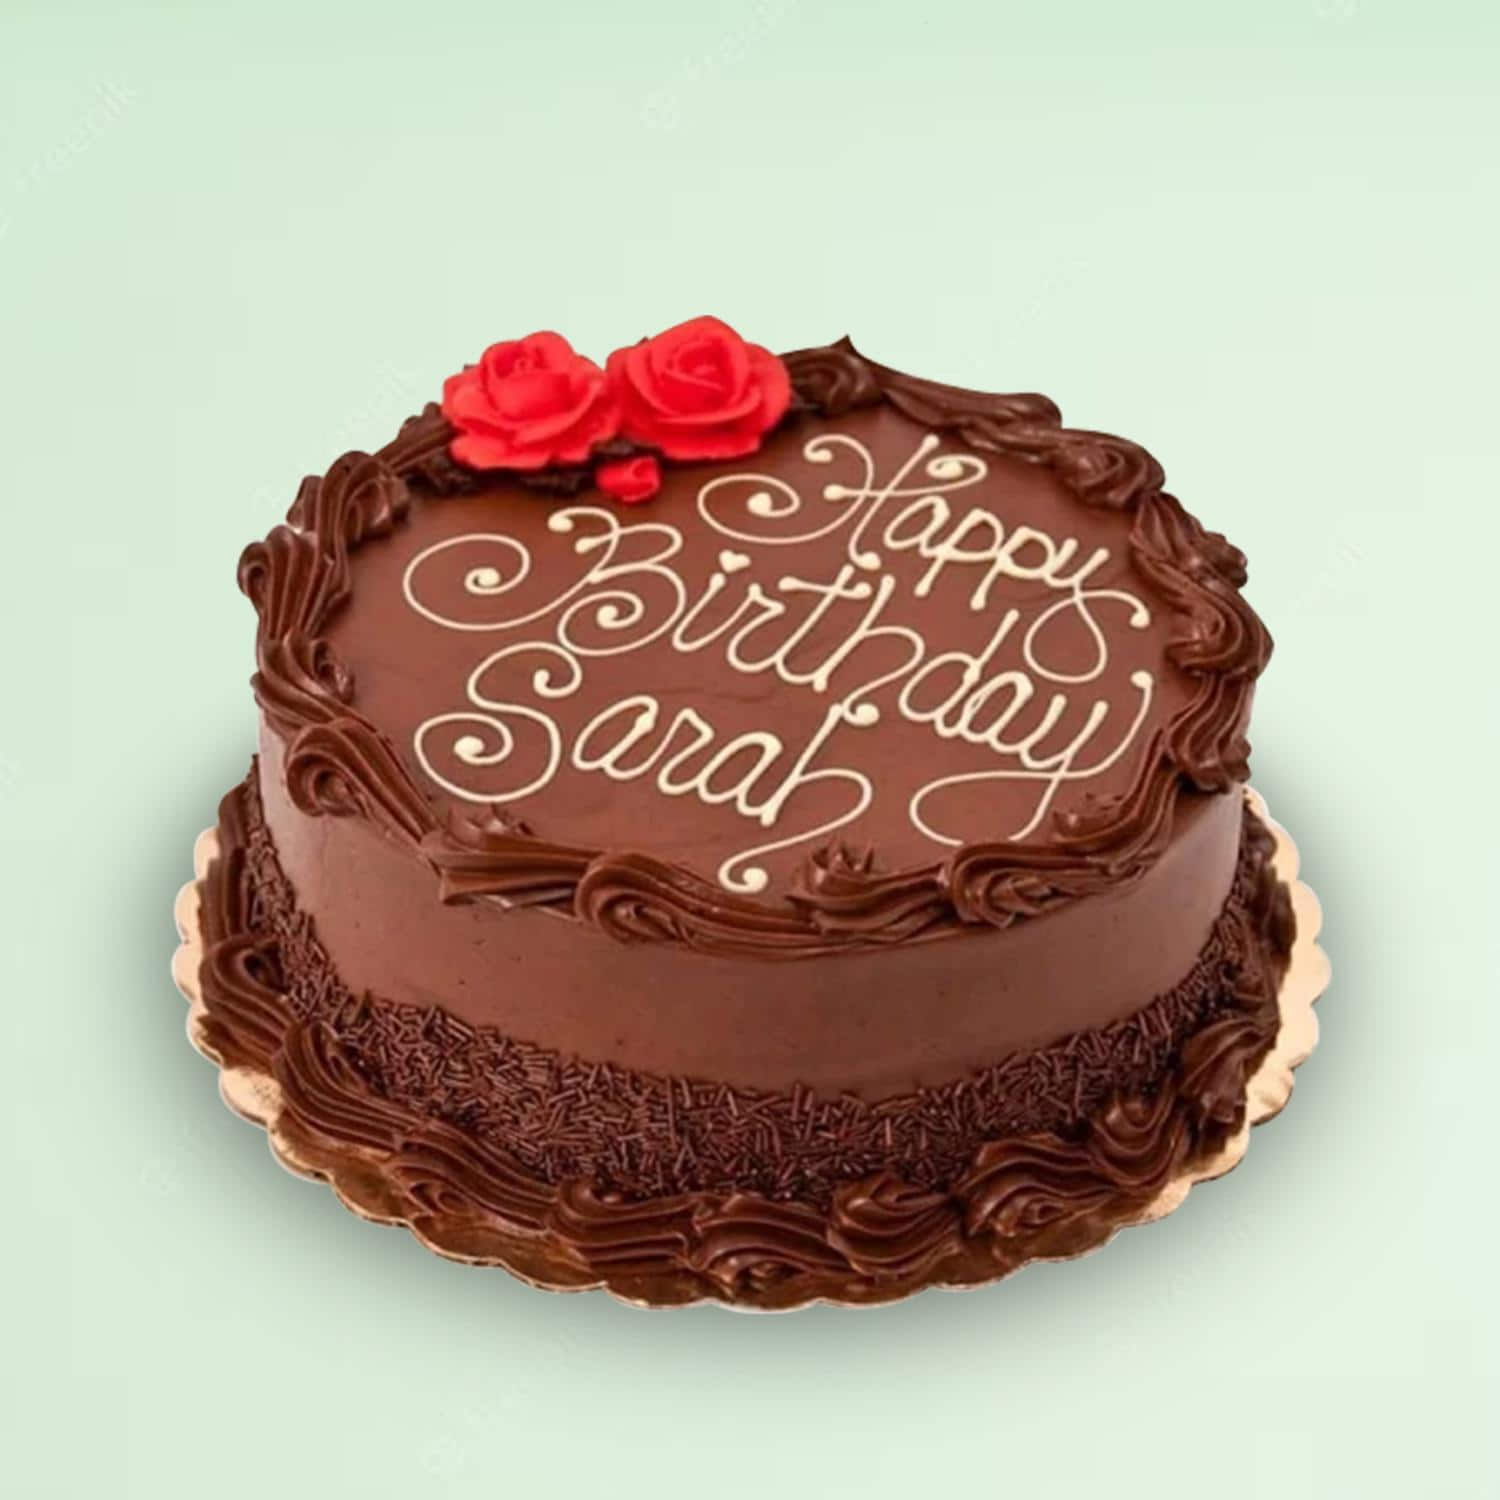 Chocolate Blackout Cake | Online Cake Shop Singapore